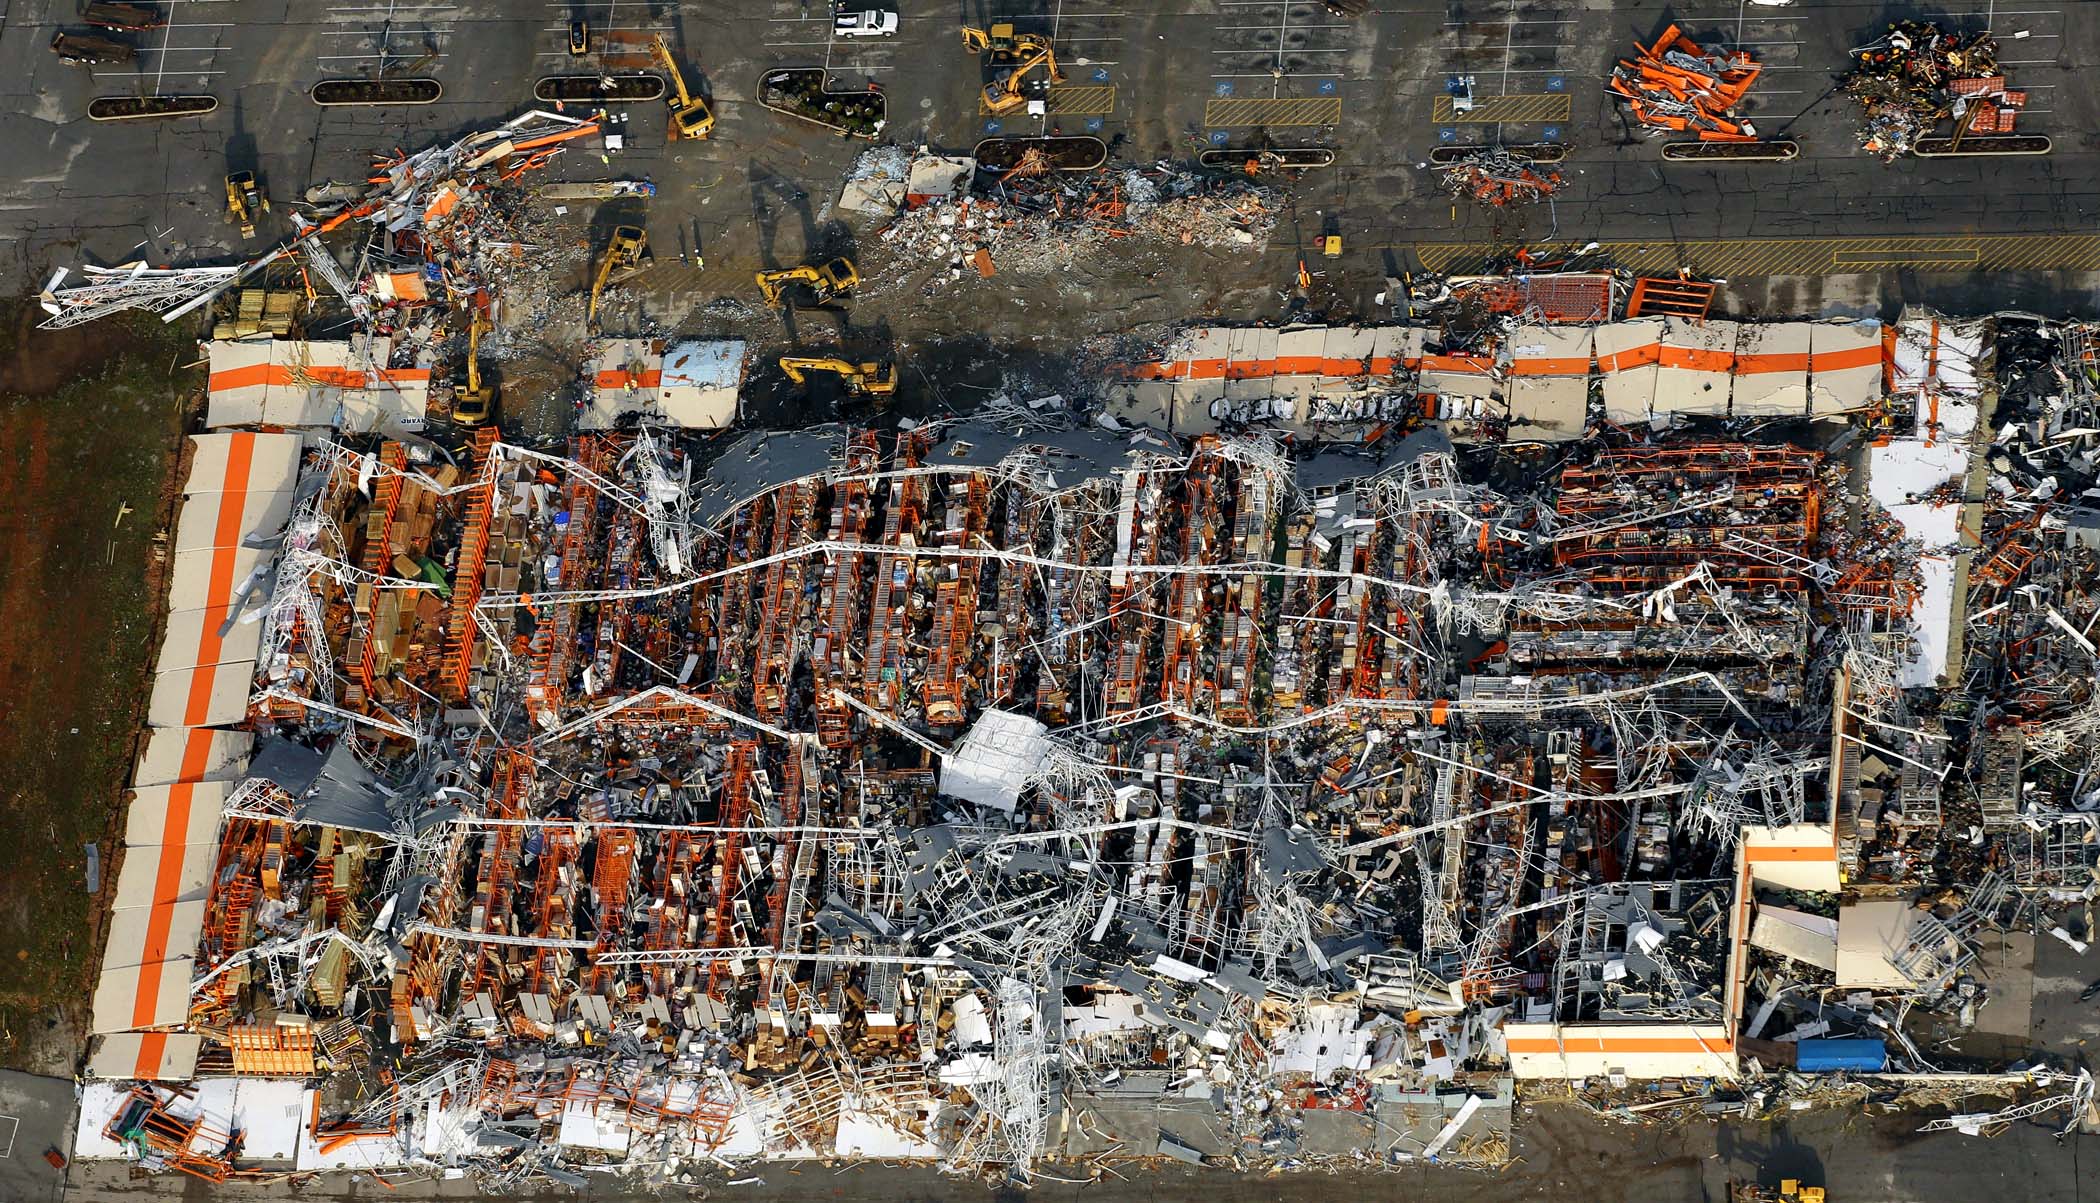 Home Depot flattened by tornado, Joplin, Missouri, 2011